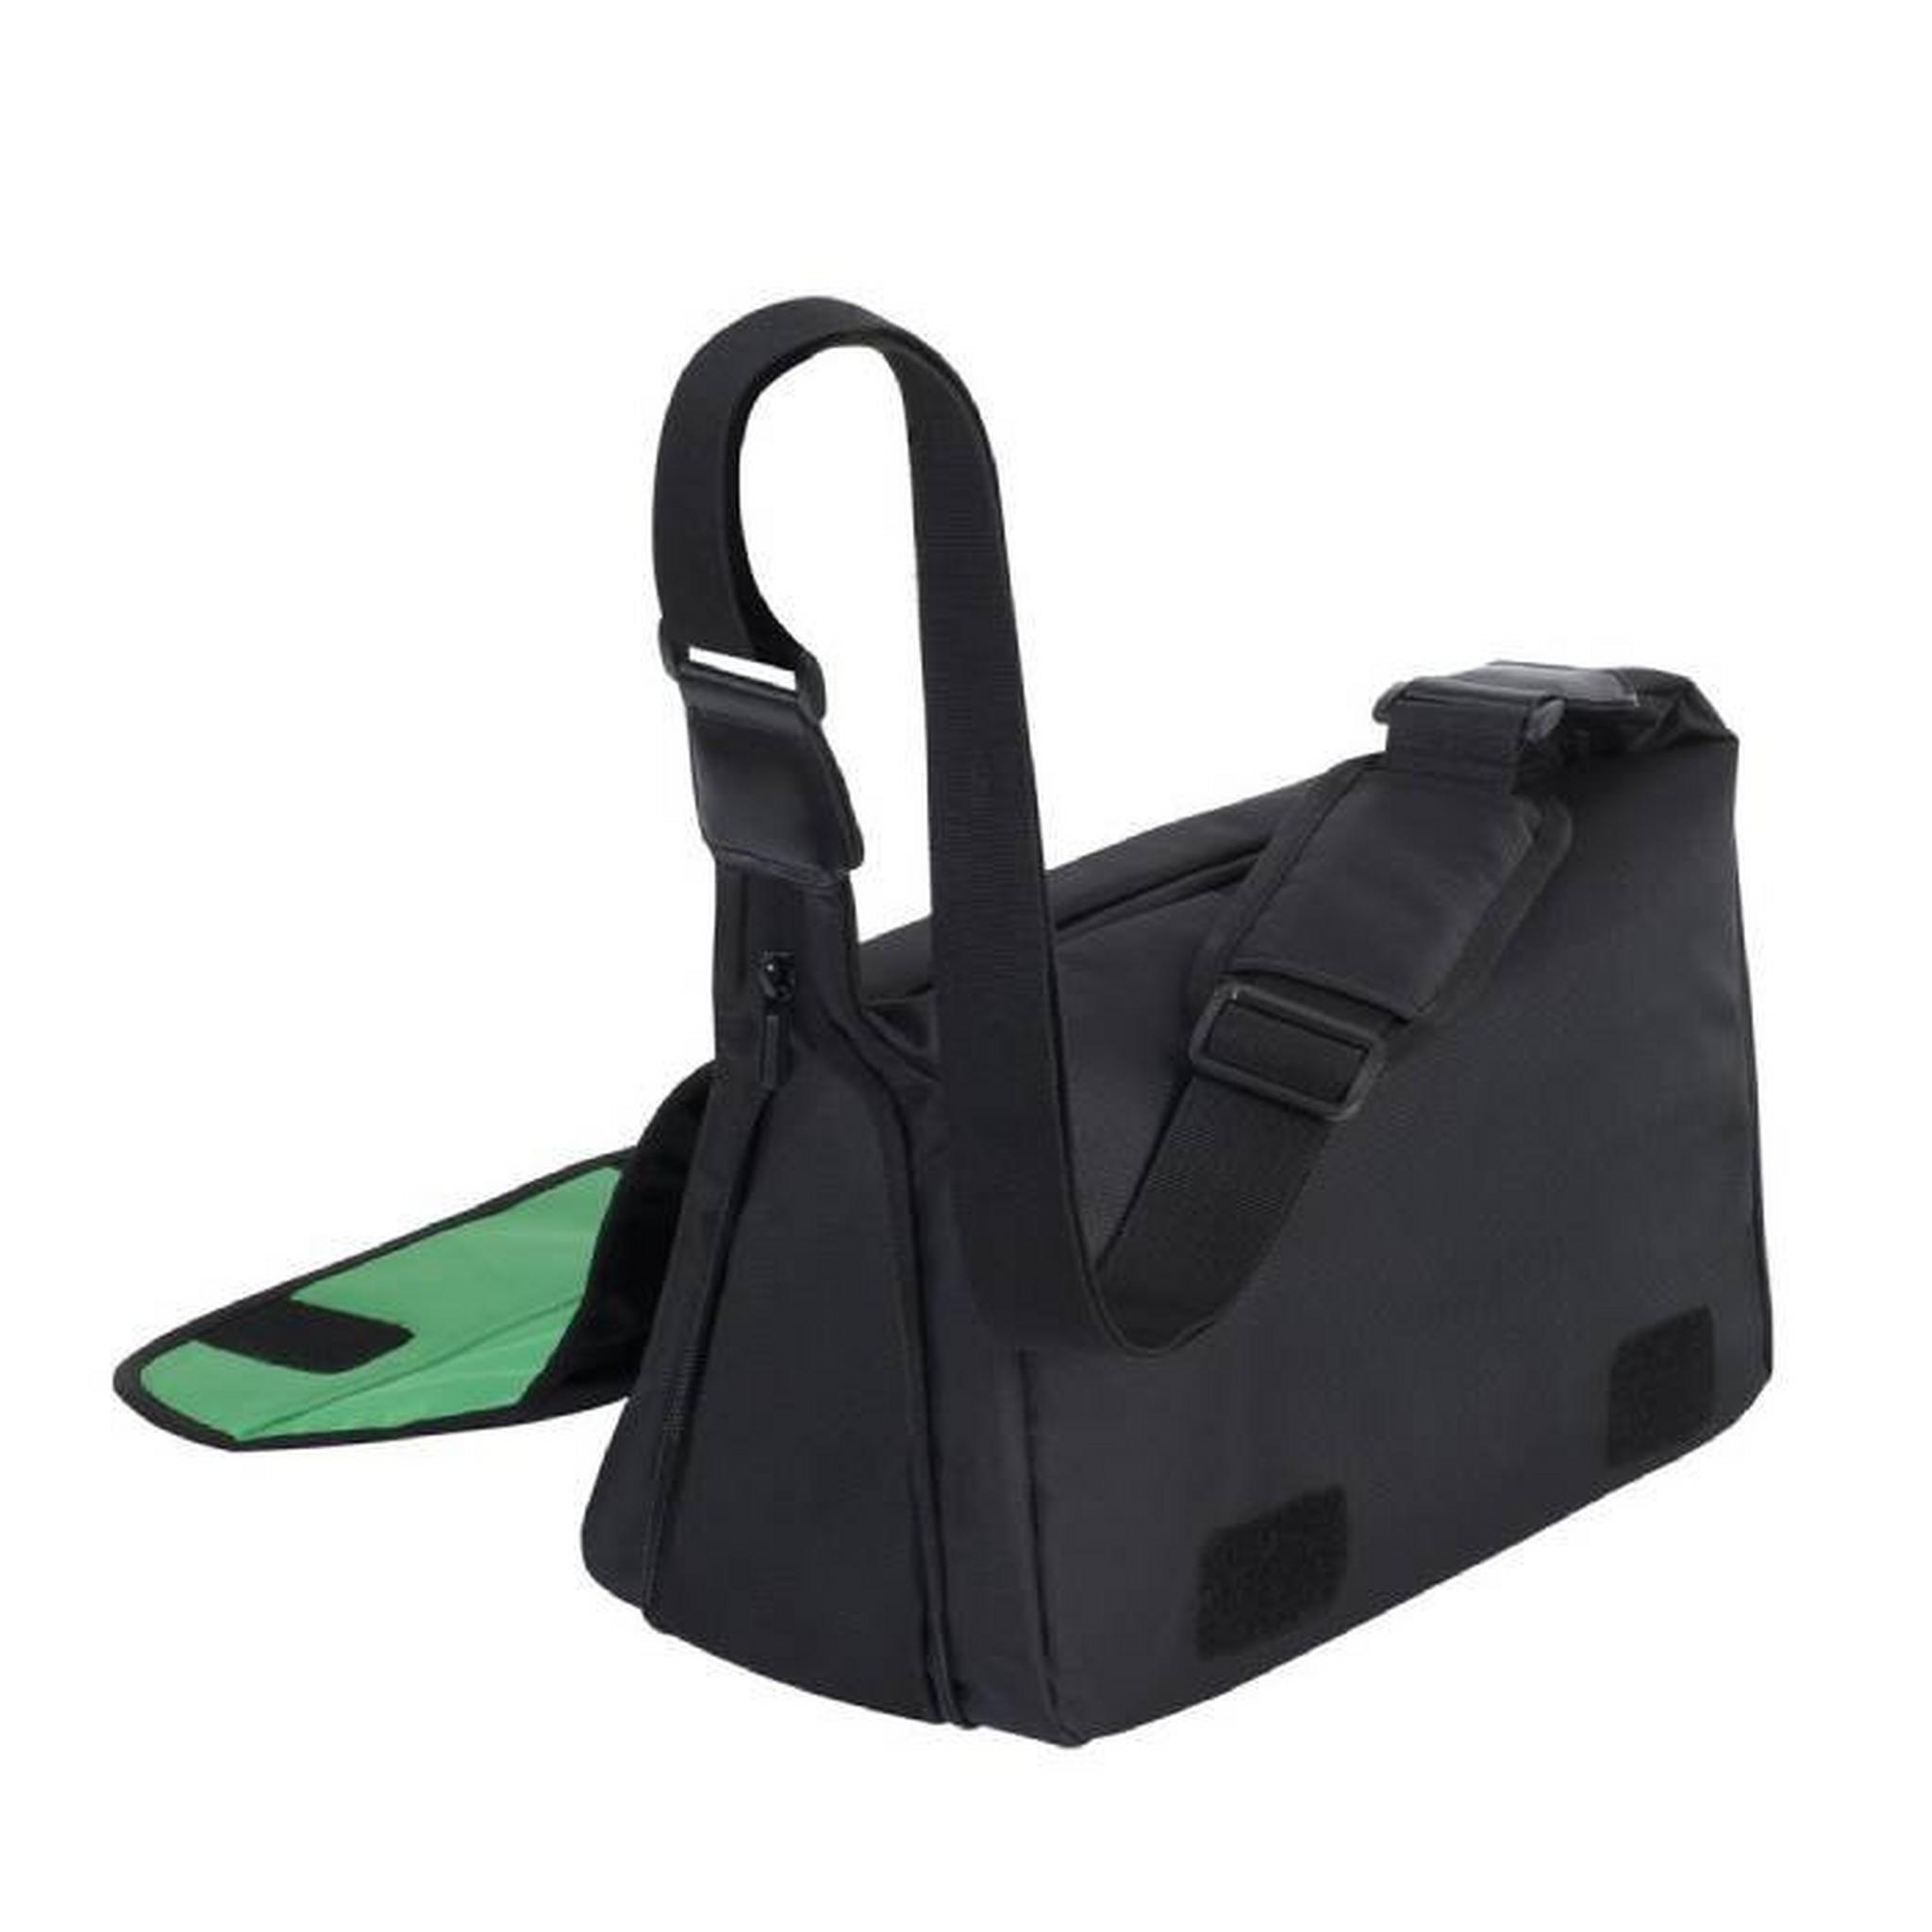 Riva Case Messenger Bag for SLR camera, 7450 (PS) BLACK – Black/Green